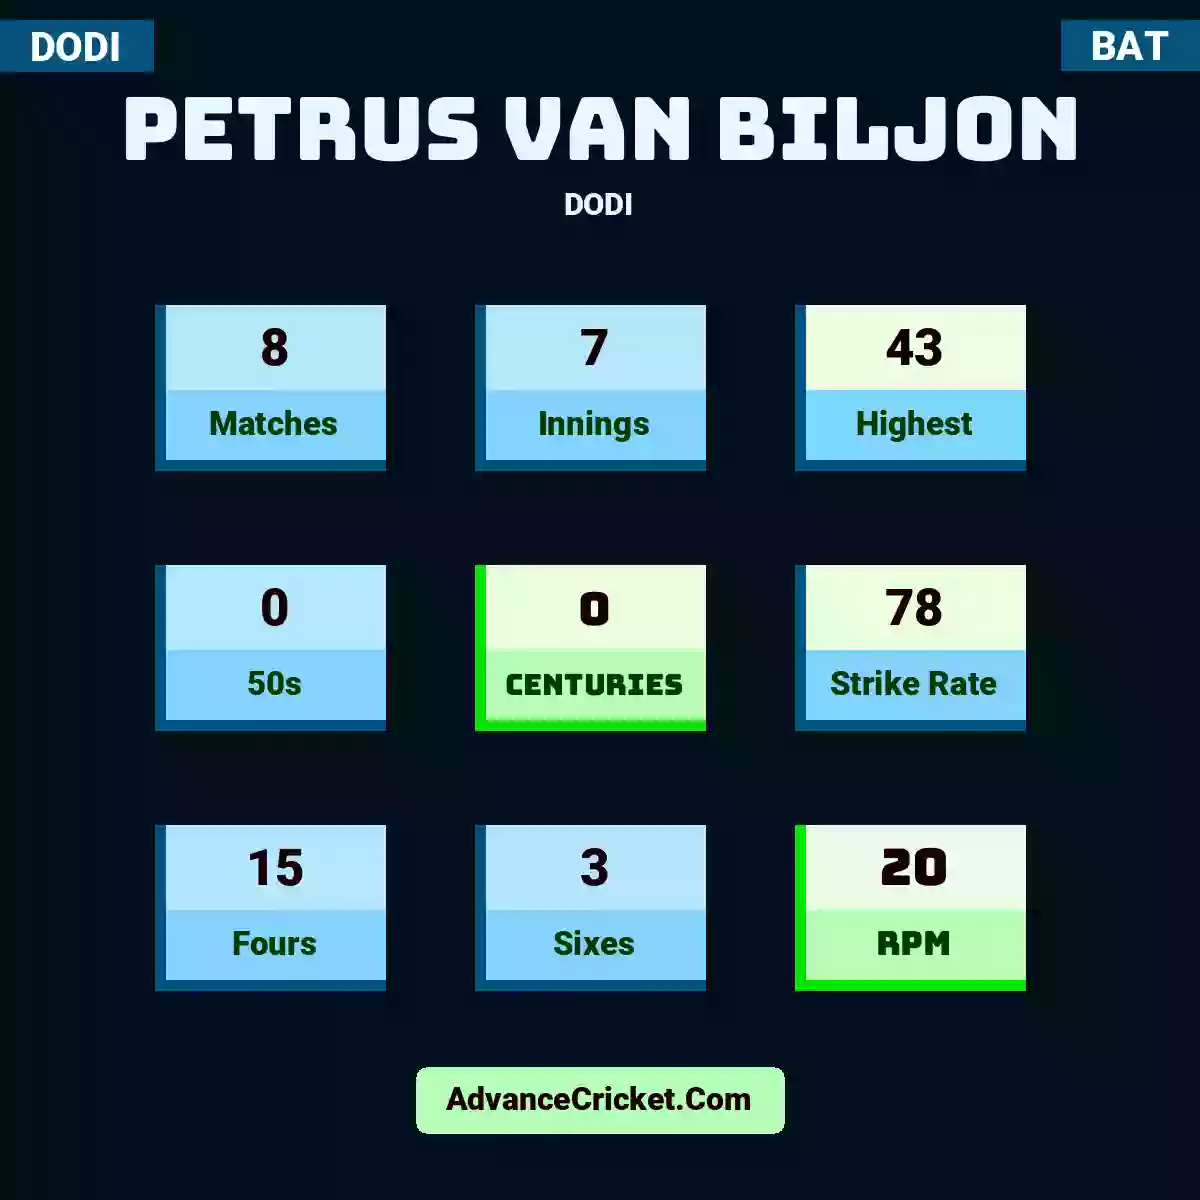 Petrus van Biljon DODI , Petrus van Biljon played 8 matches, scored 43 runs as highest, 0 half-centuries, and 0 centuries, with a strike rate of 78. P.Biljon hit 15 fours and 3 sixes, with an RPM of 20.